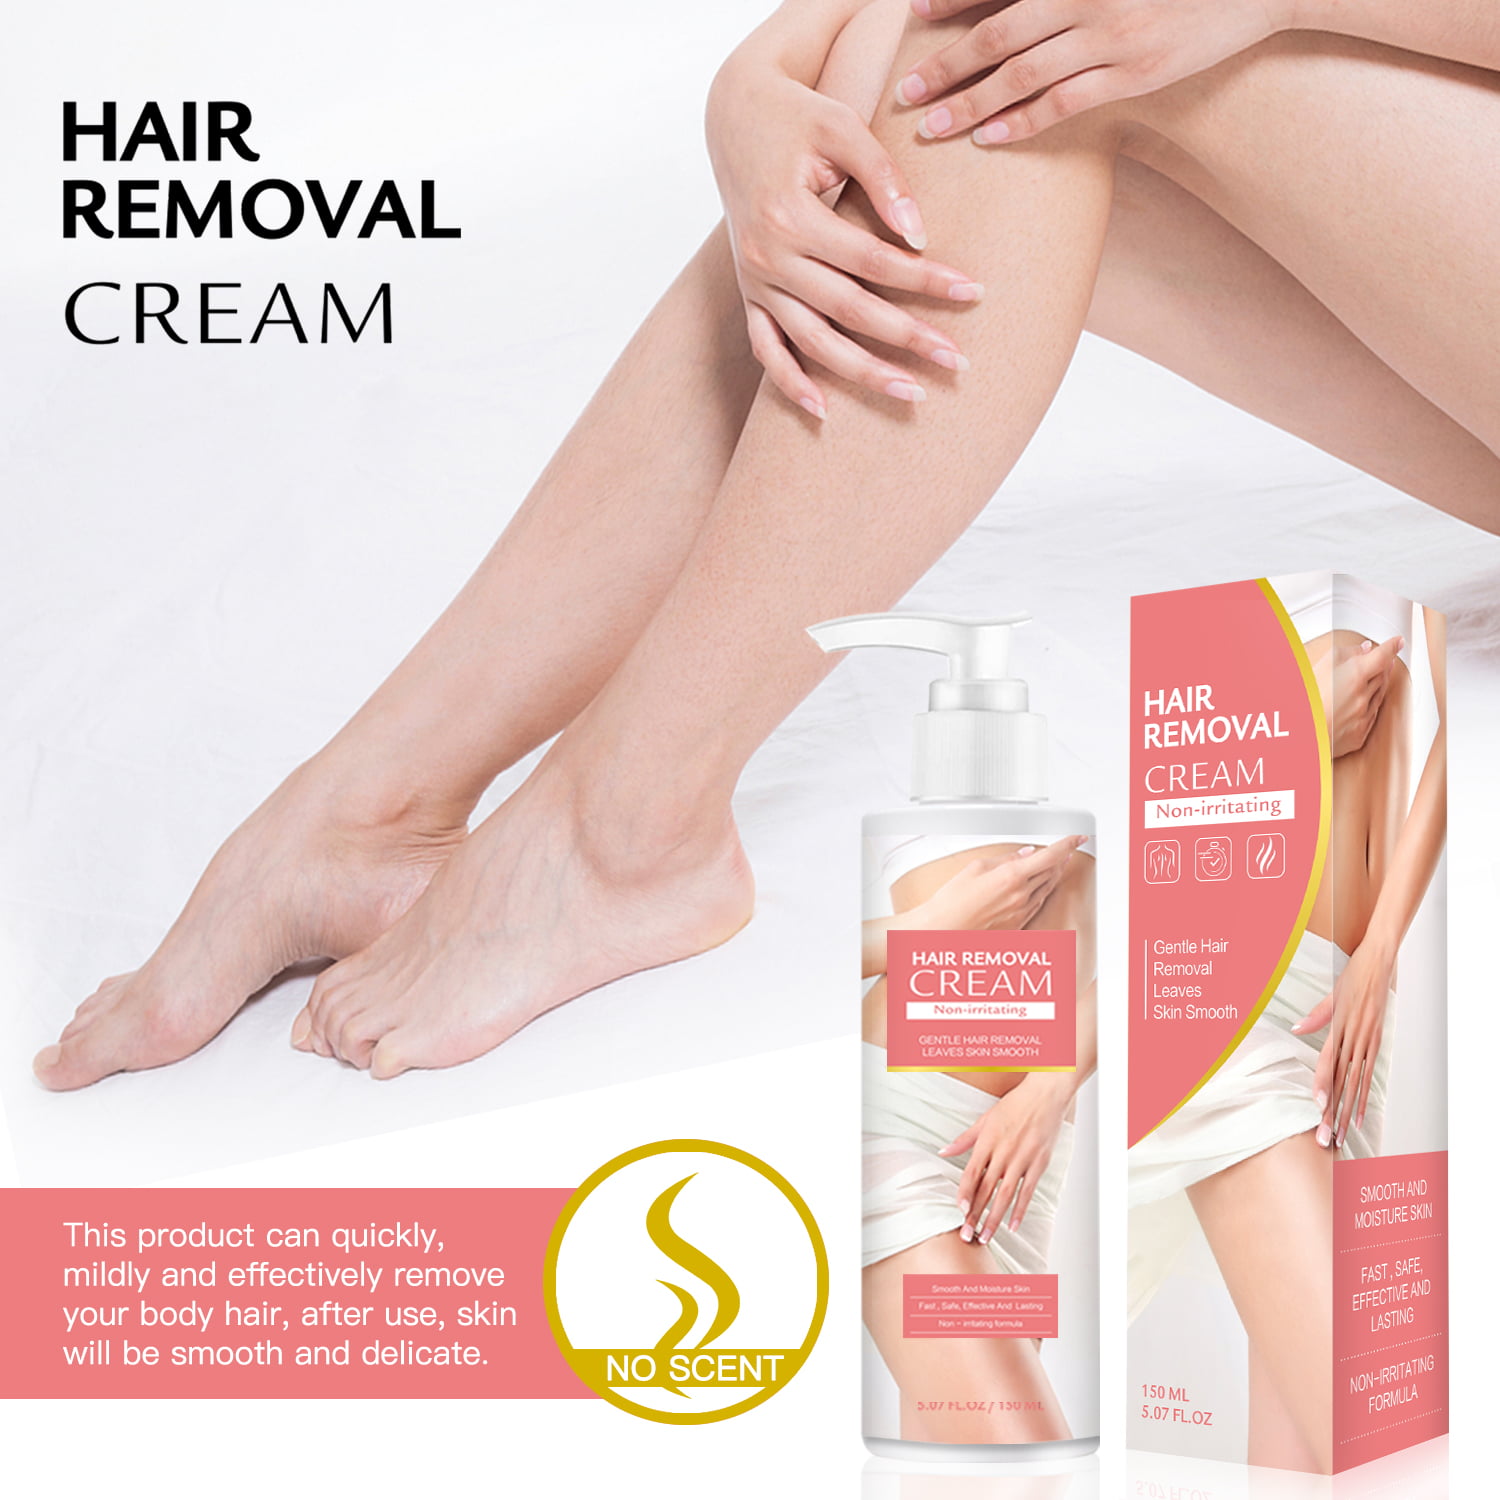 Nads Sensitive Hair Removal Cream Reviews - beautyheaven